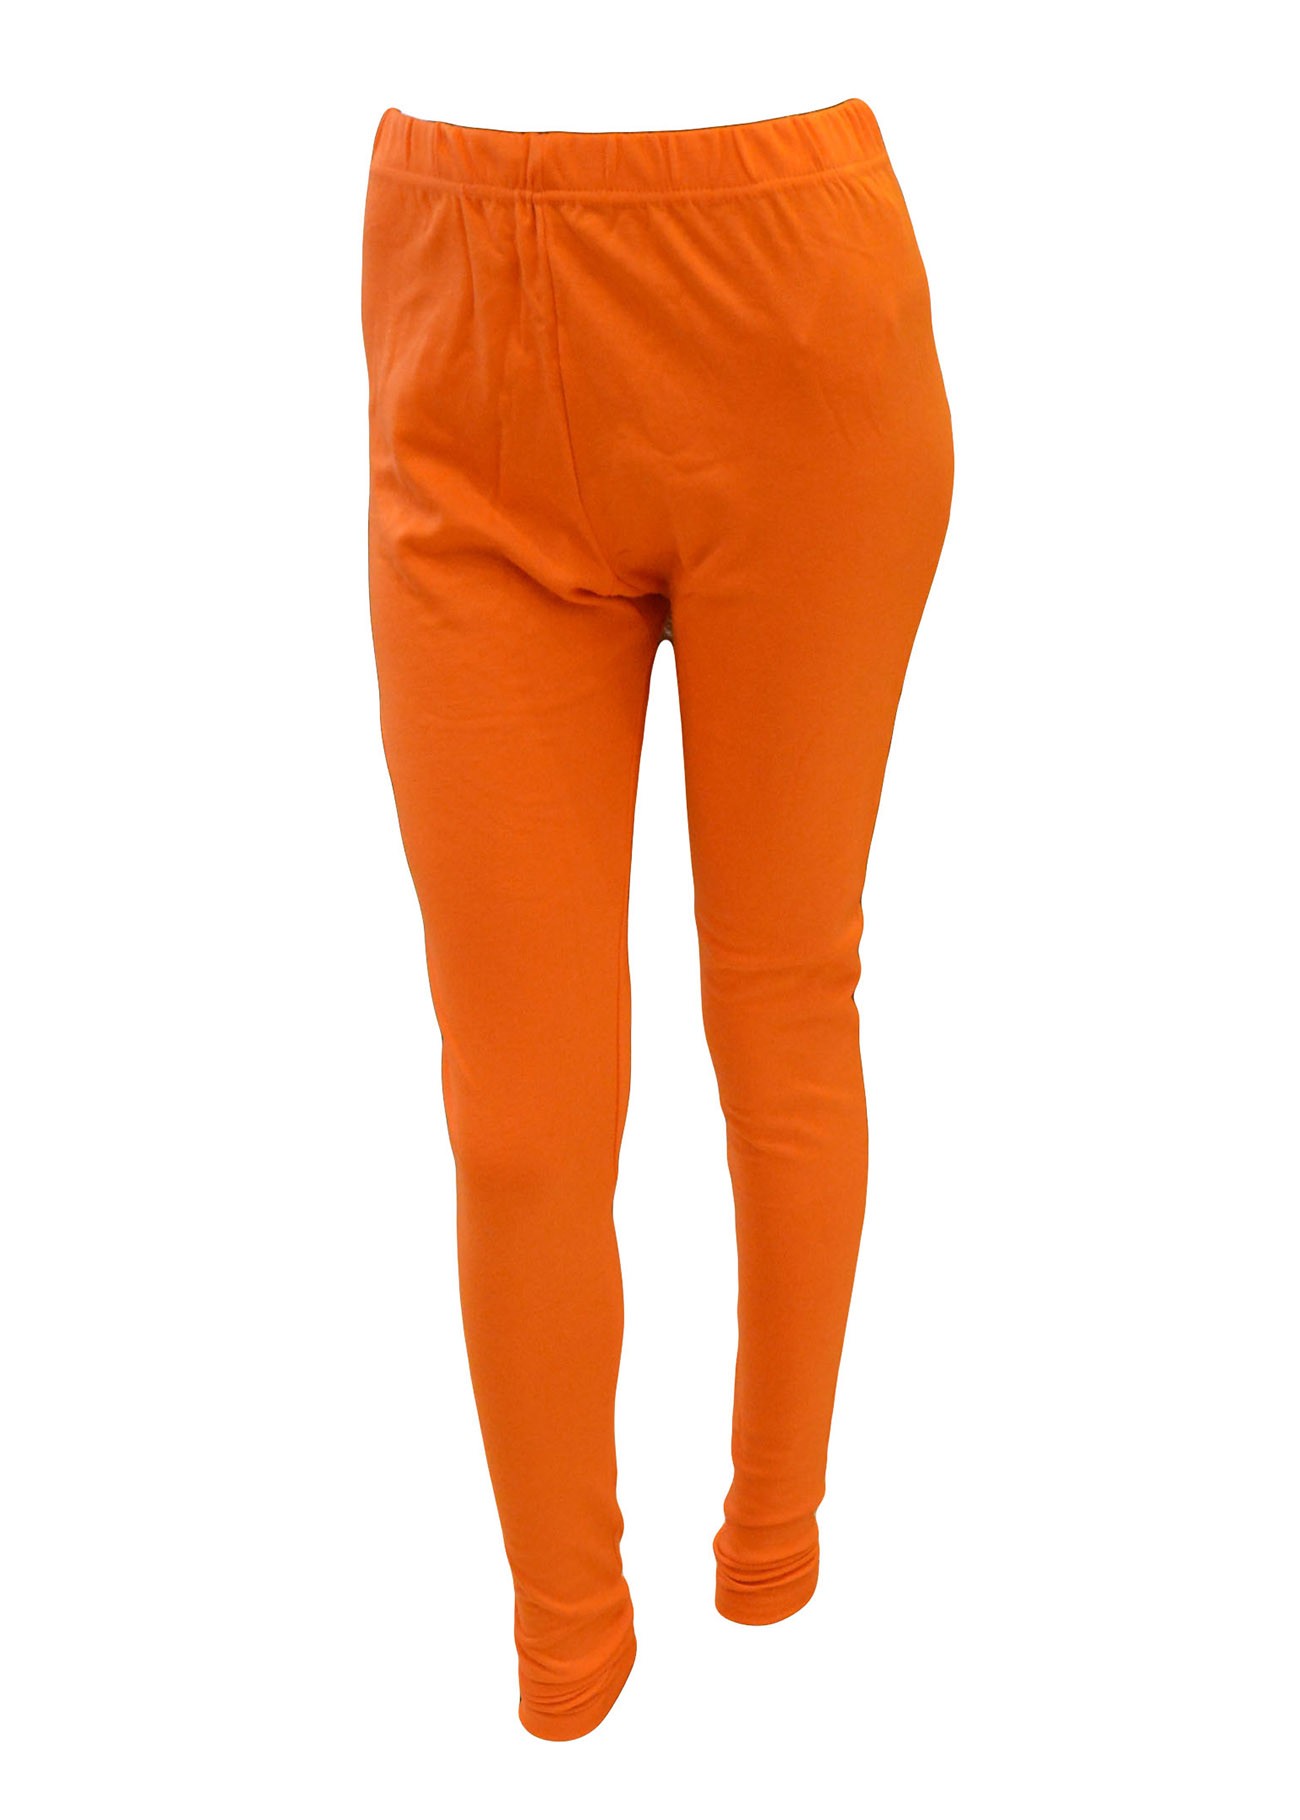 Orange Stretchable Cotton Leggings-Orange-XXXL - Leggings - Womens Wear